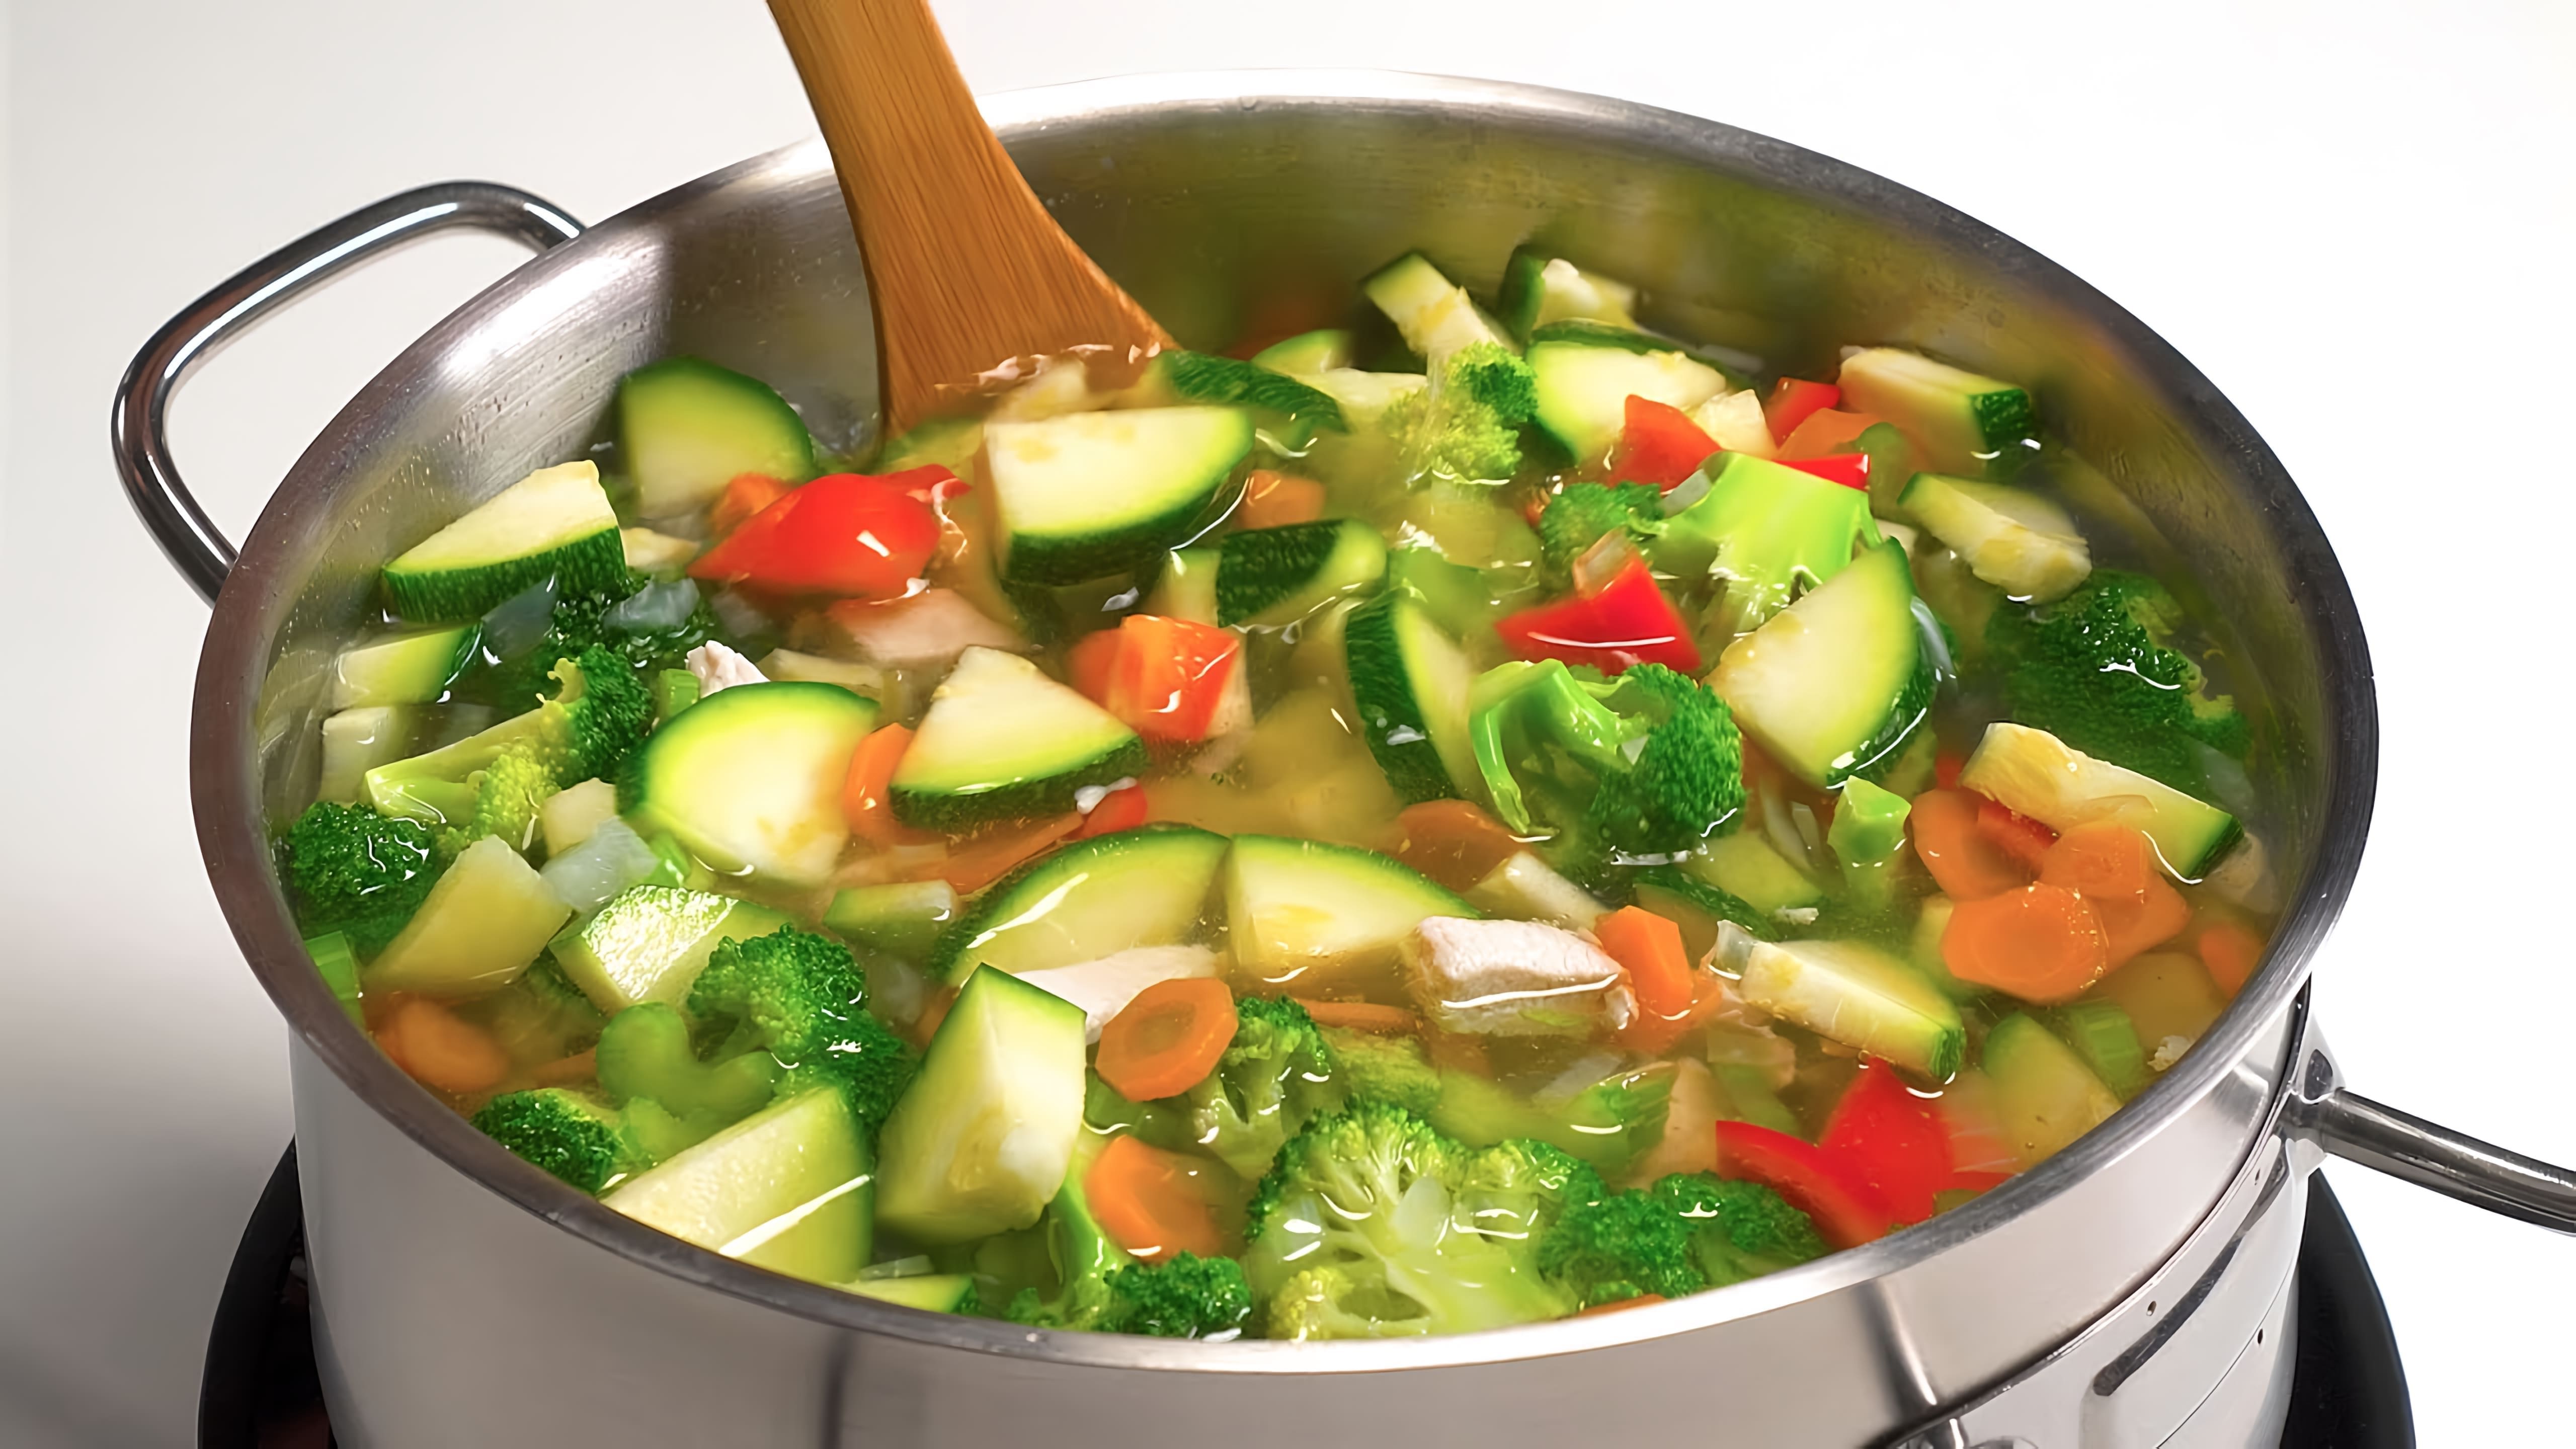 Видео - рецепт легкого, вкусного и здорового курино-овощного супа